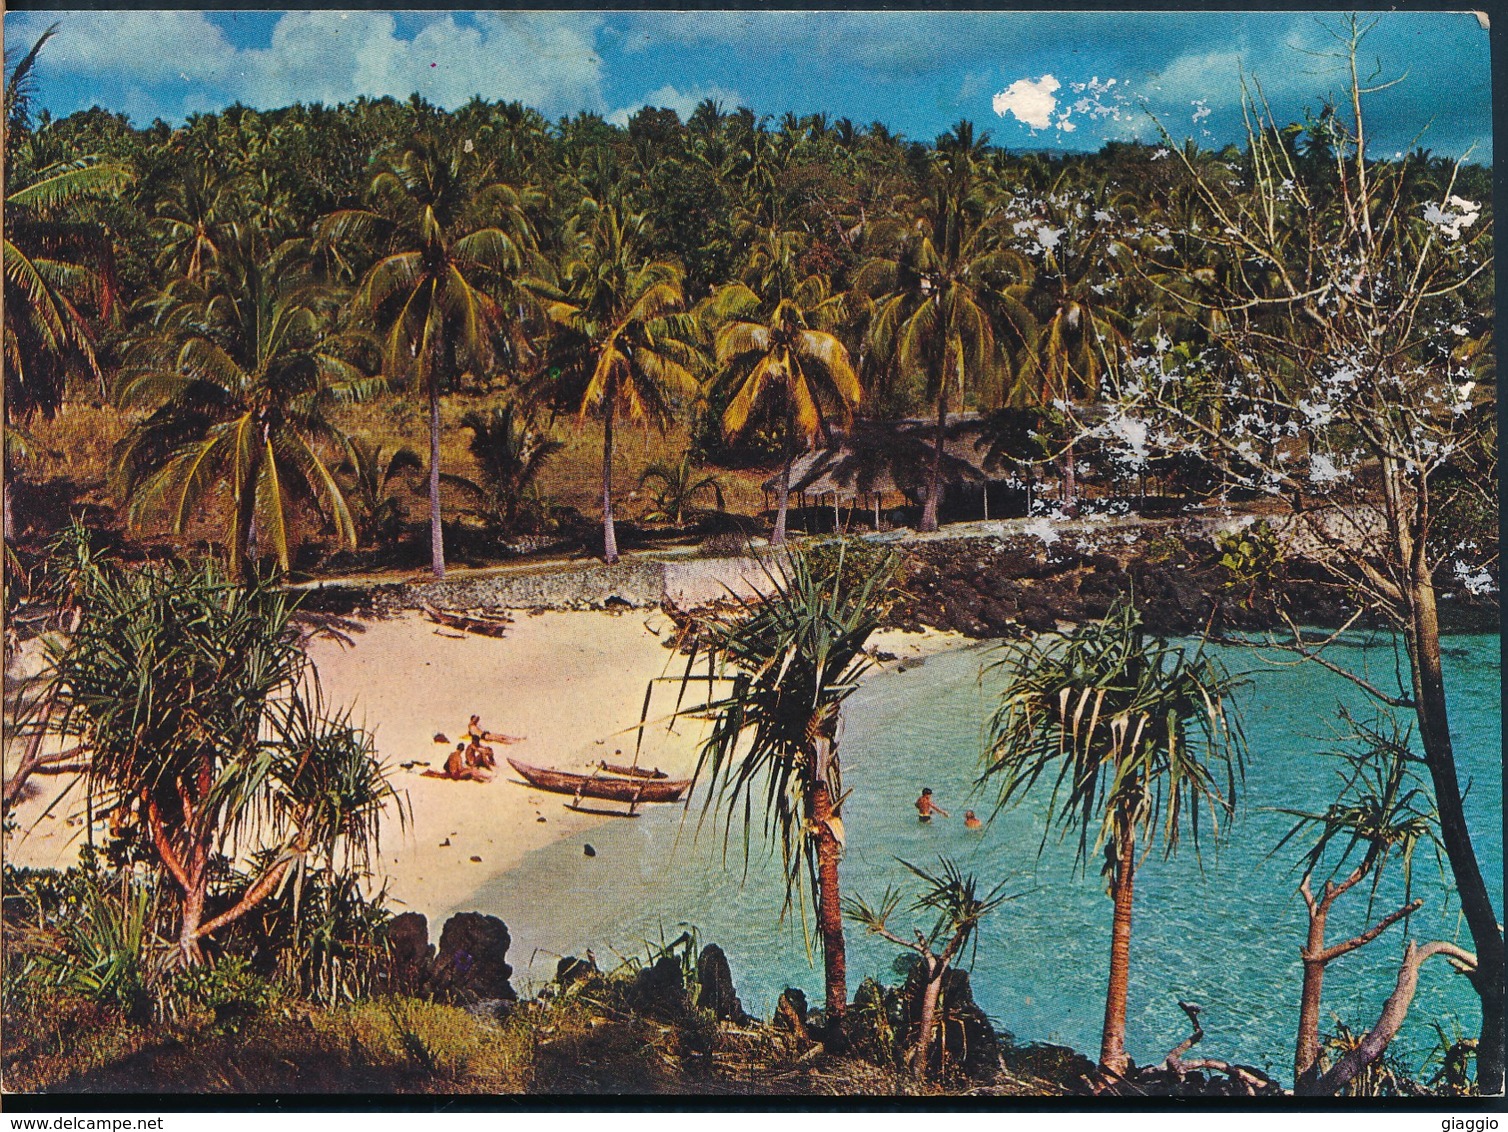 °°° 19305 - GRANDE COMORE - MORONI - HOTEL ITSANDRA °°° - Comoros